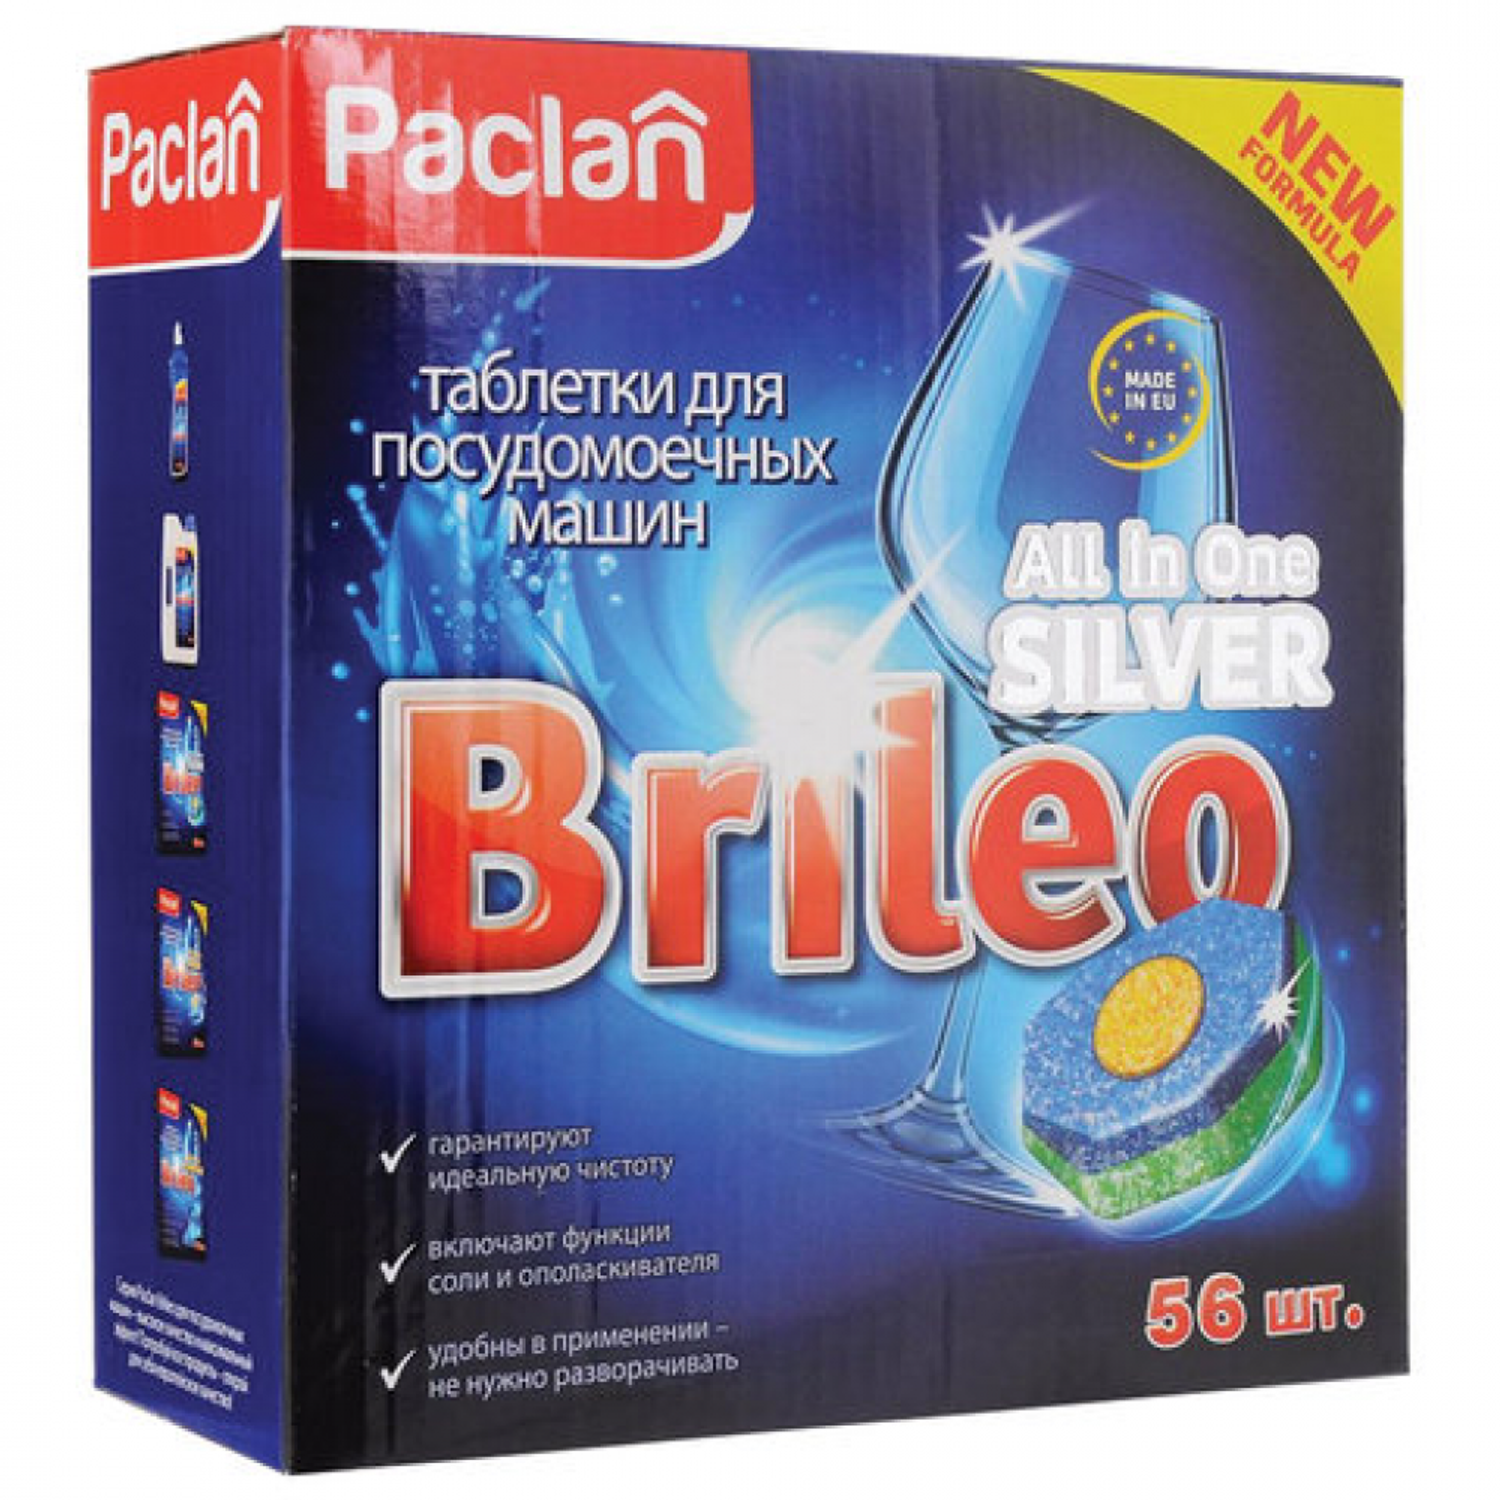 Таблетки Paclan Brileo для посудомоечных машин All in one Silver 56 шт - фото 1